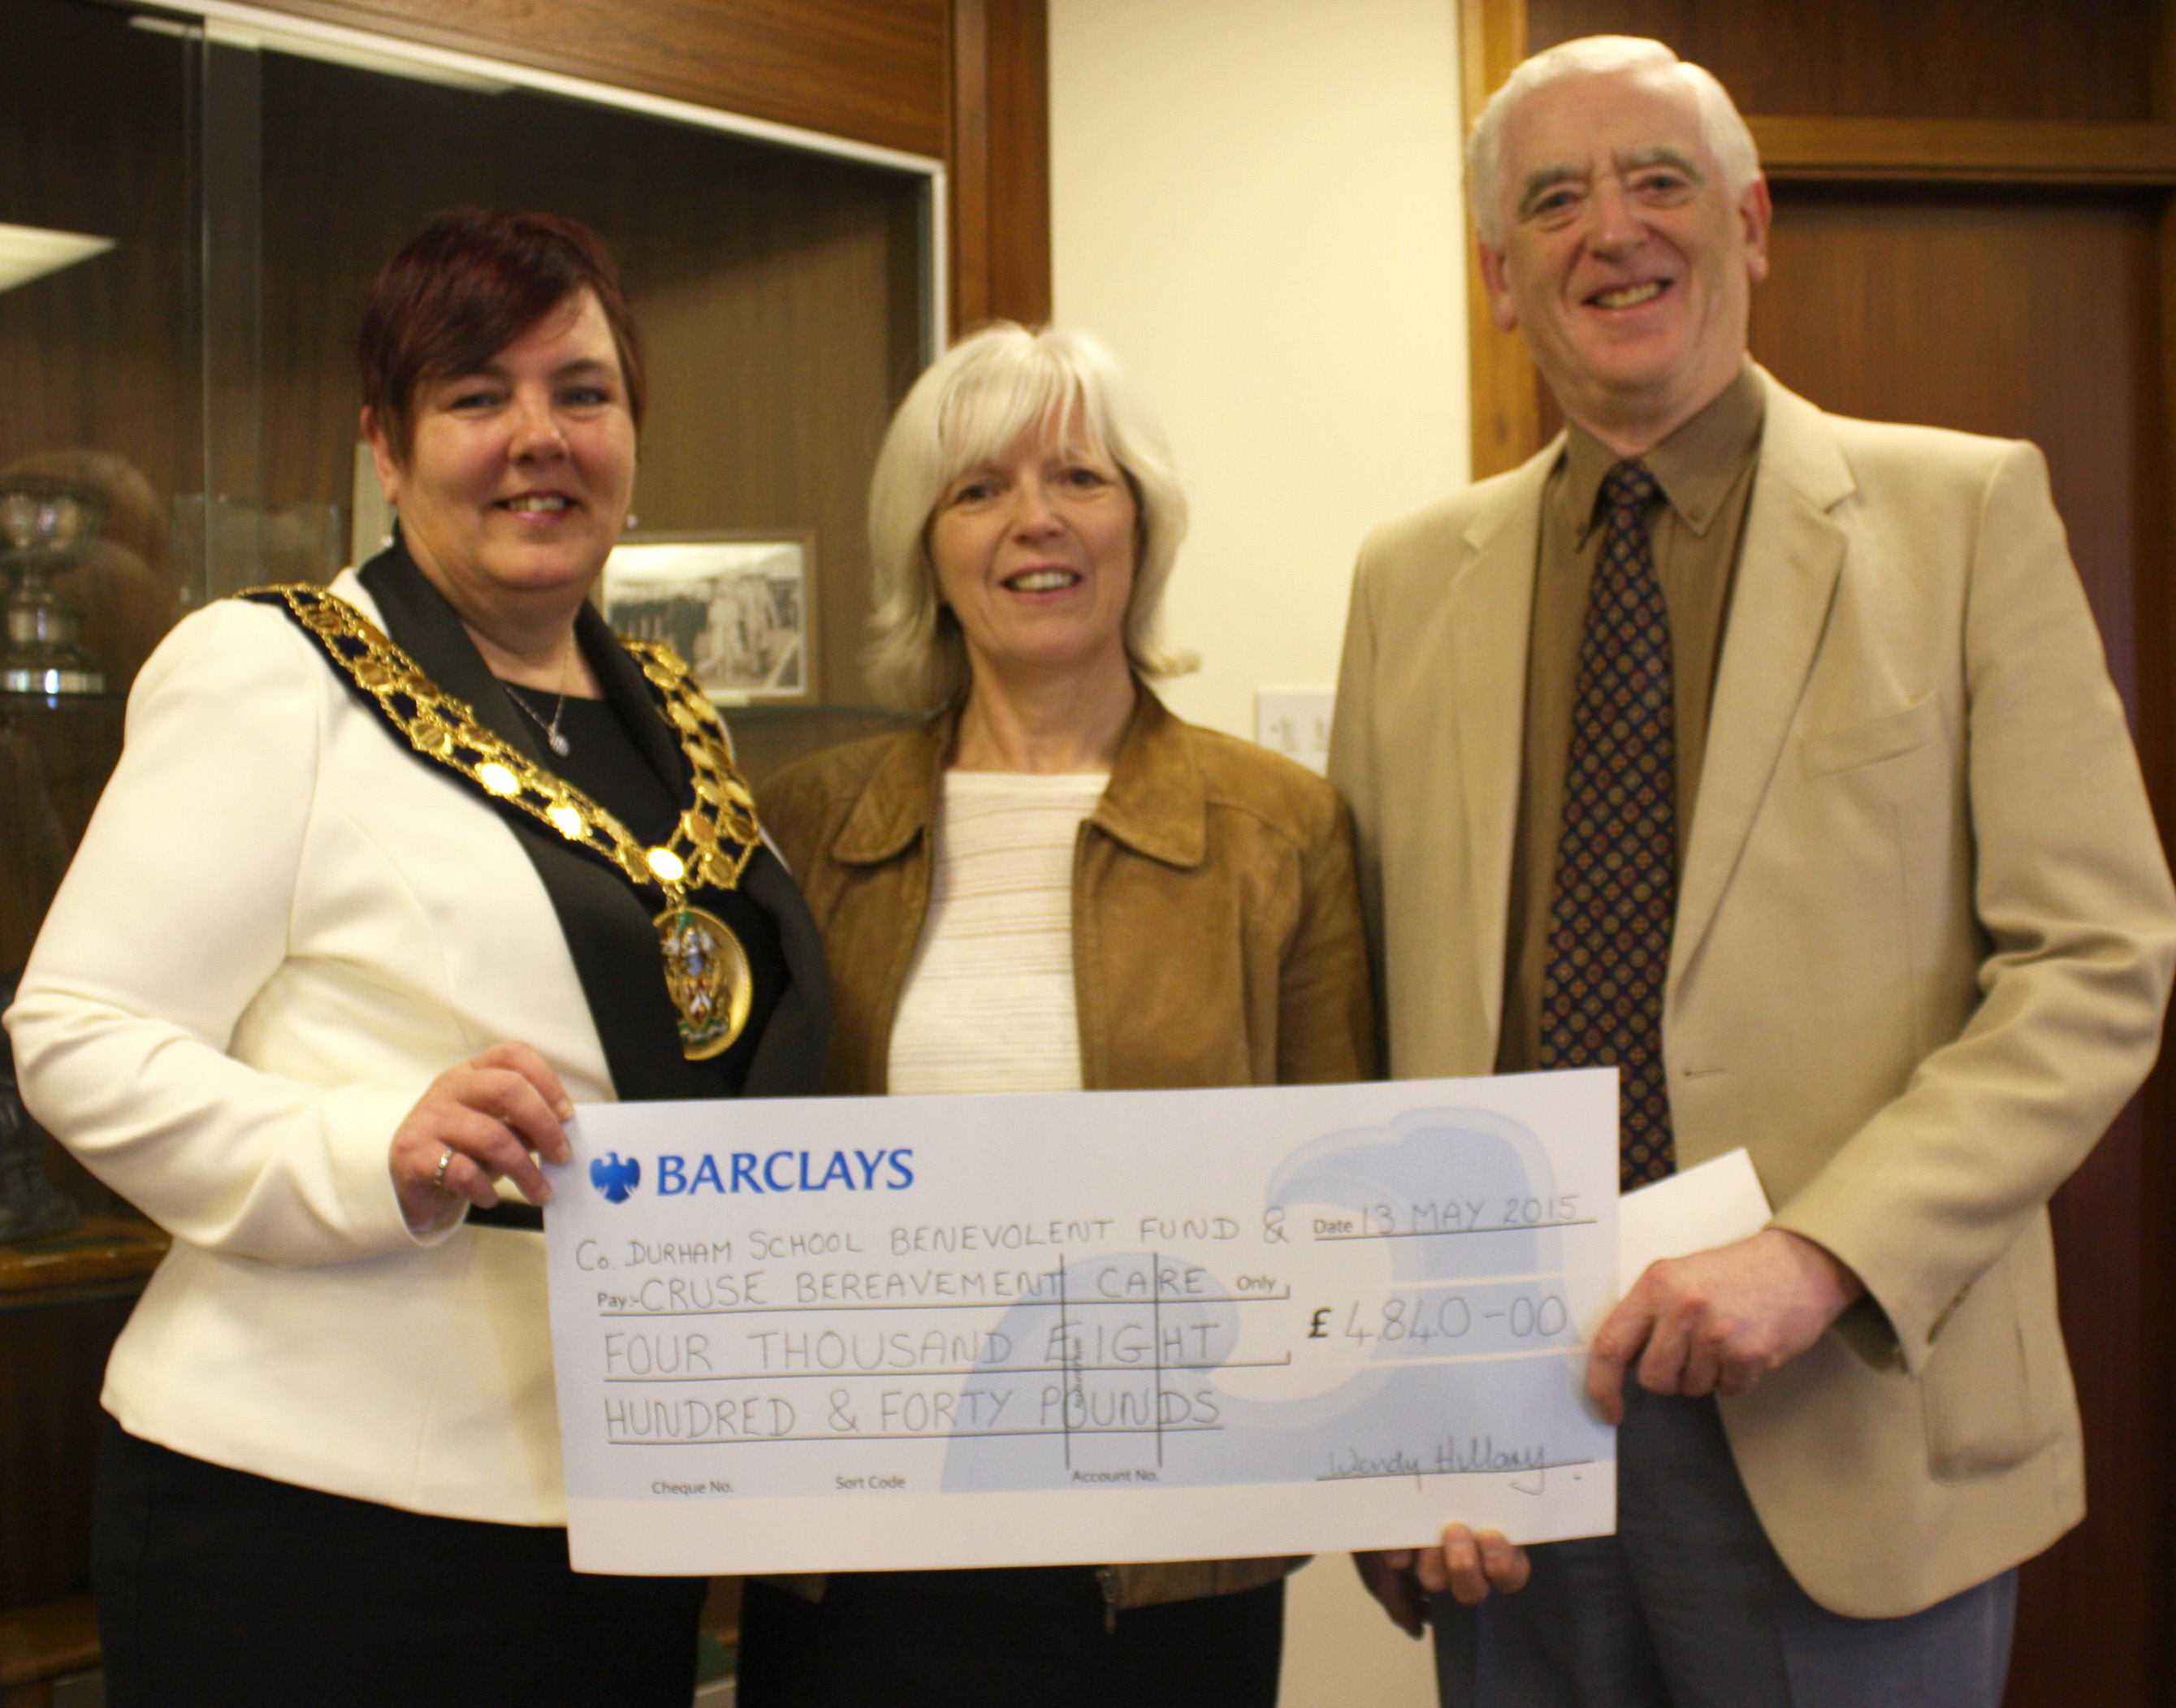 Past Mayor’s Charity Events Raised £4,840